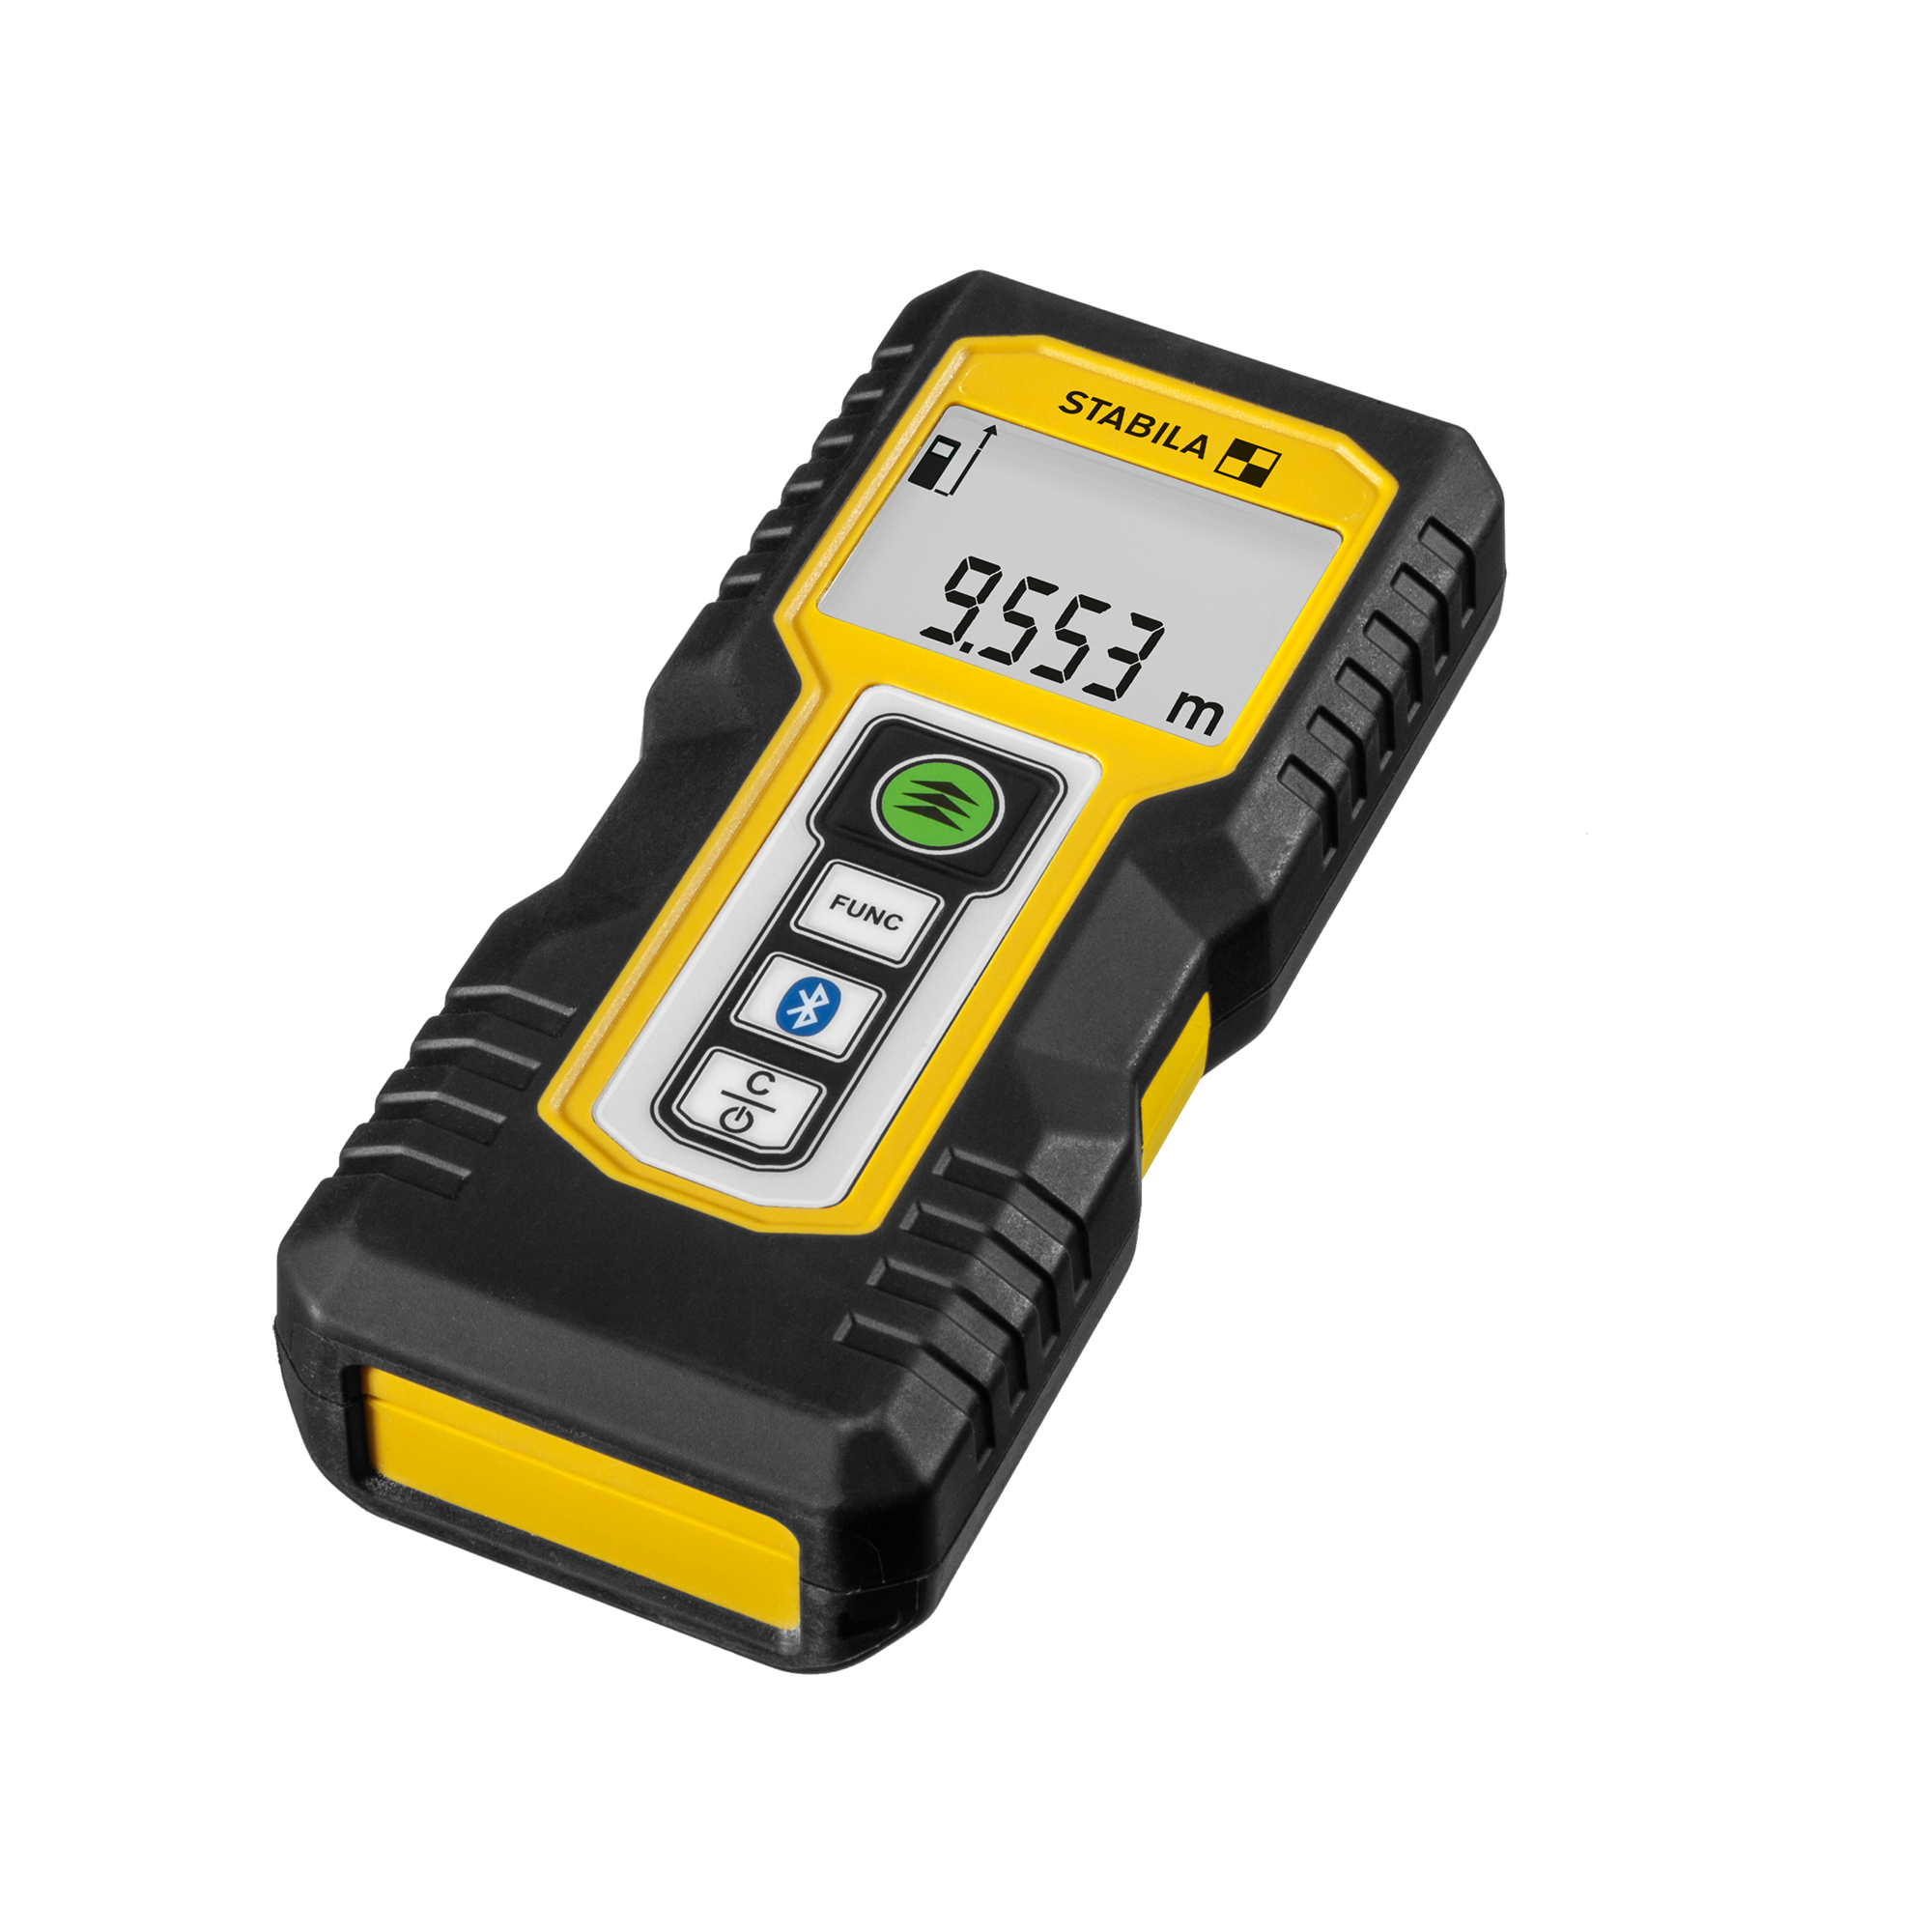 LD 250BT 165ft Bluetooth® Laser Distance Measurer